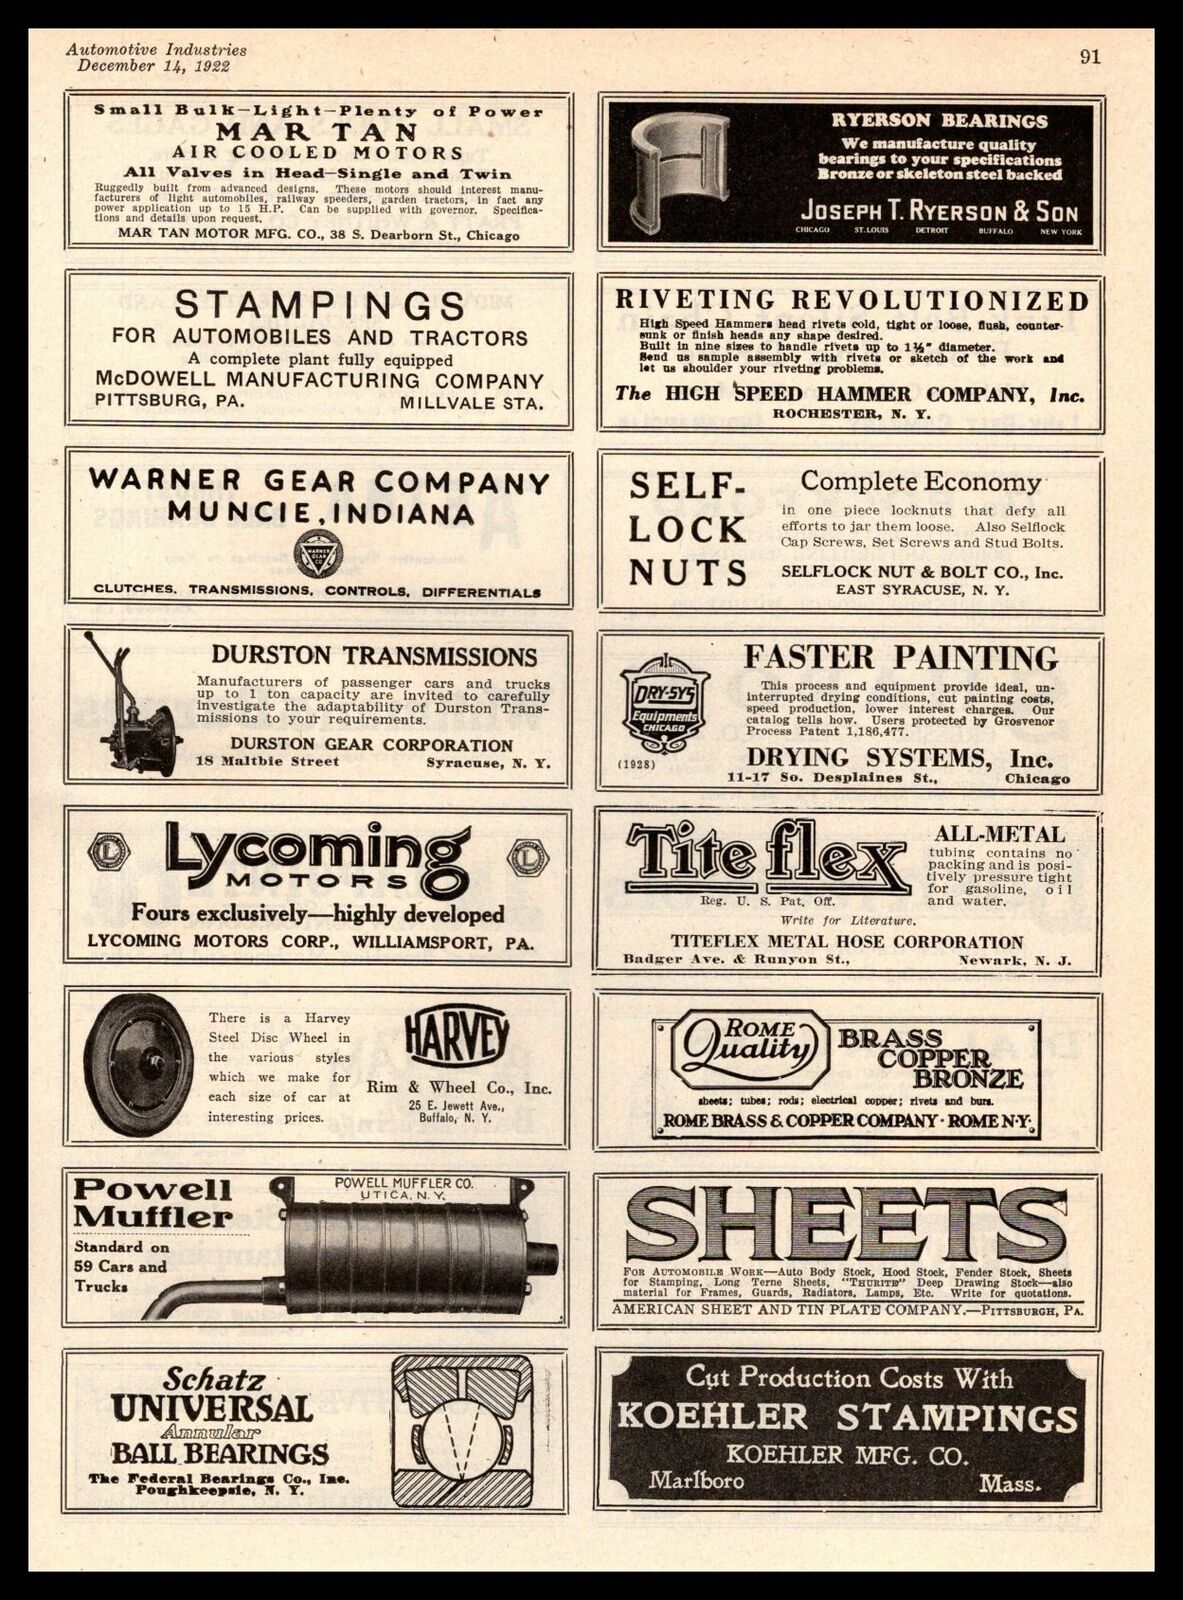 1922 Durston Gear Company Syracuse New York And Selflock Nut & Bolt Co. Print Ad